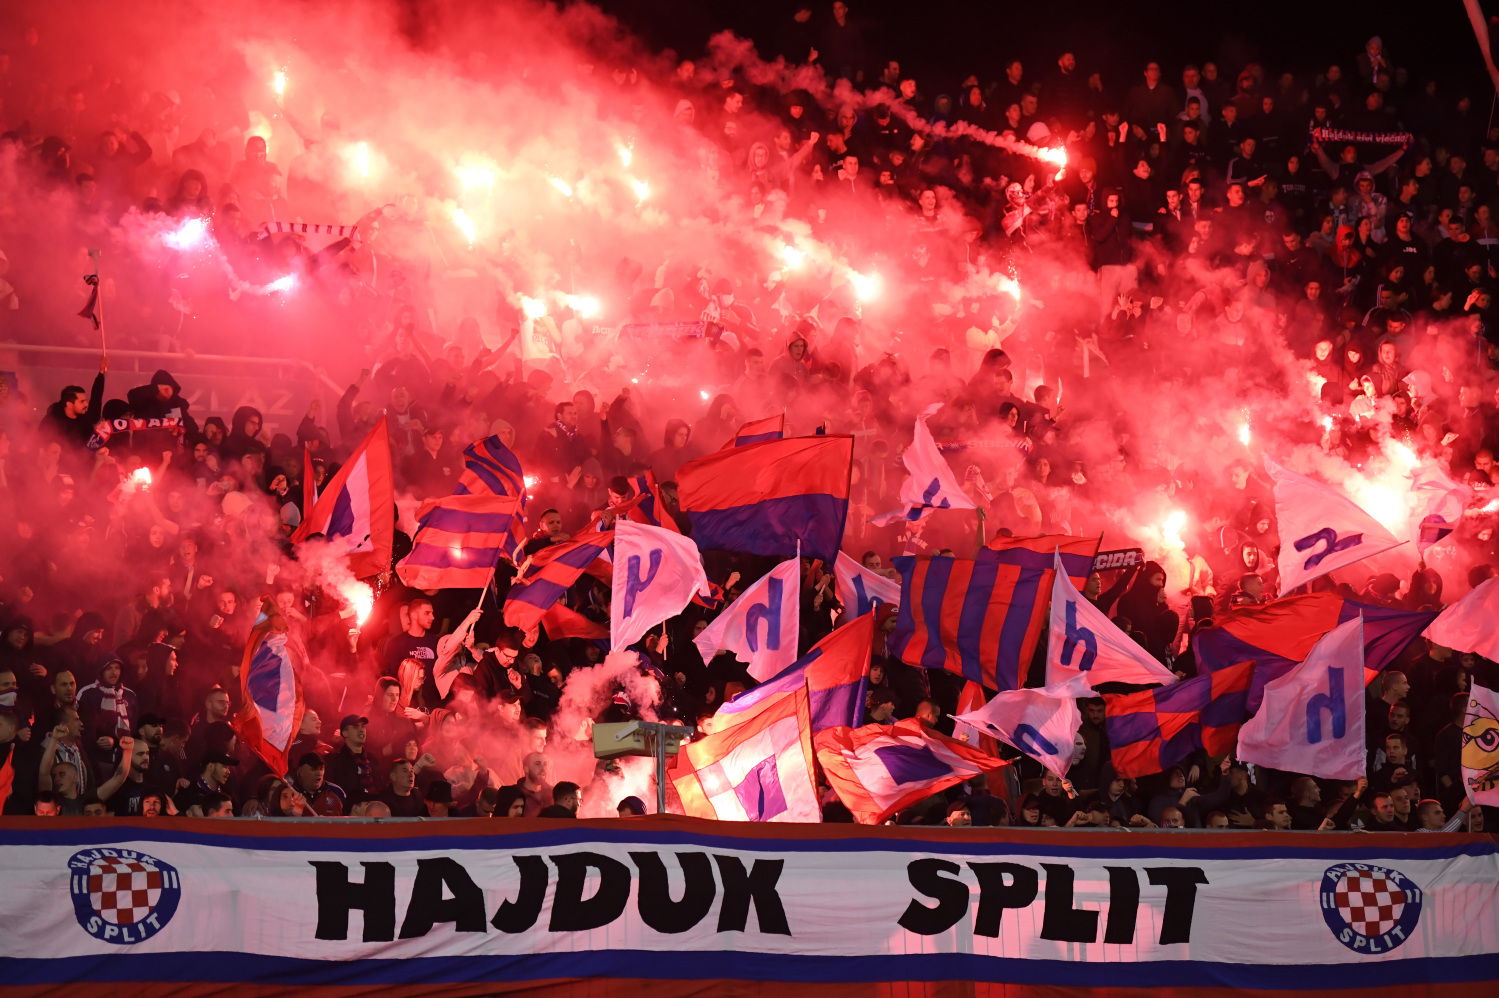 HNK Hajduk Split on X: Kraj prvog dijela na Poljudu: Hajduk